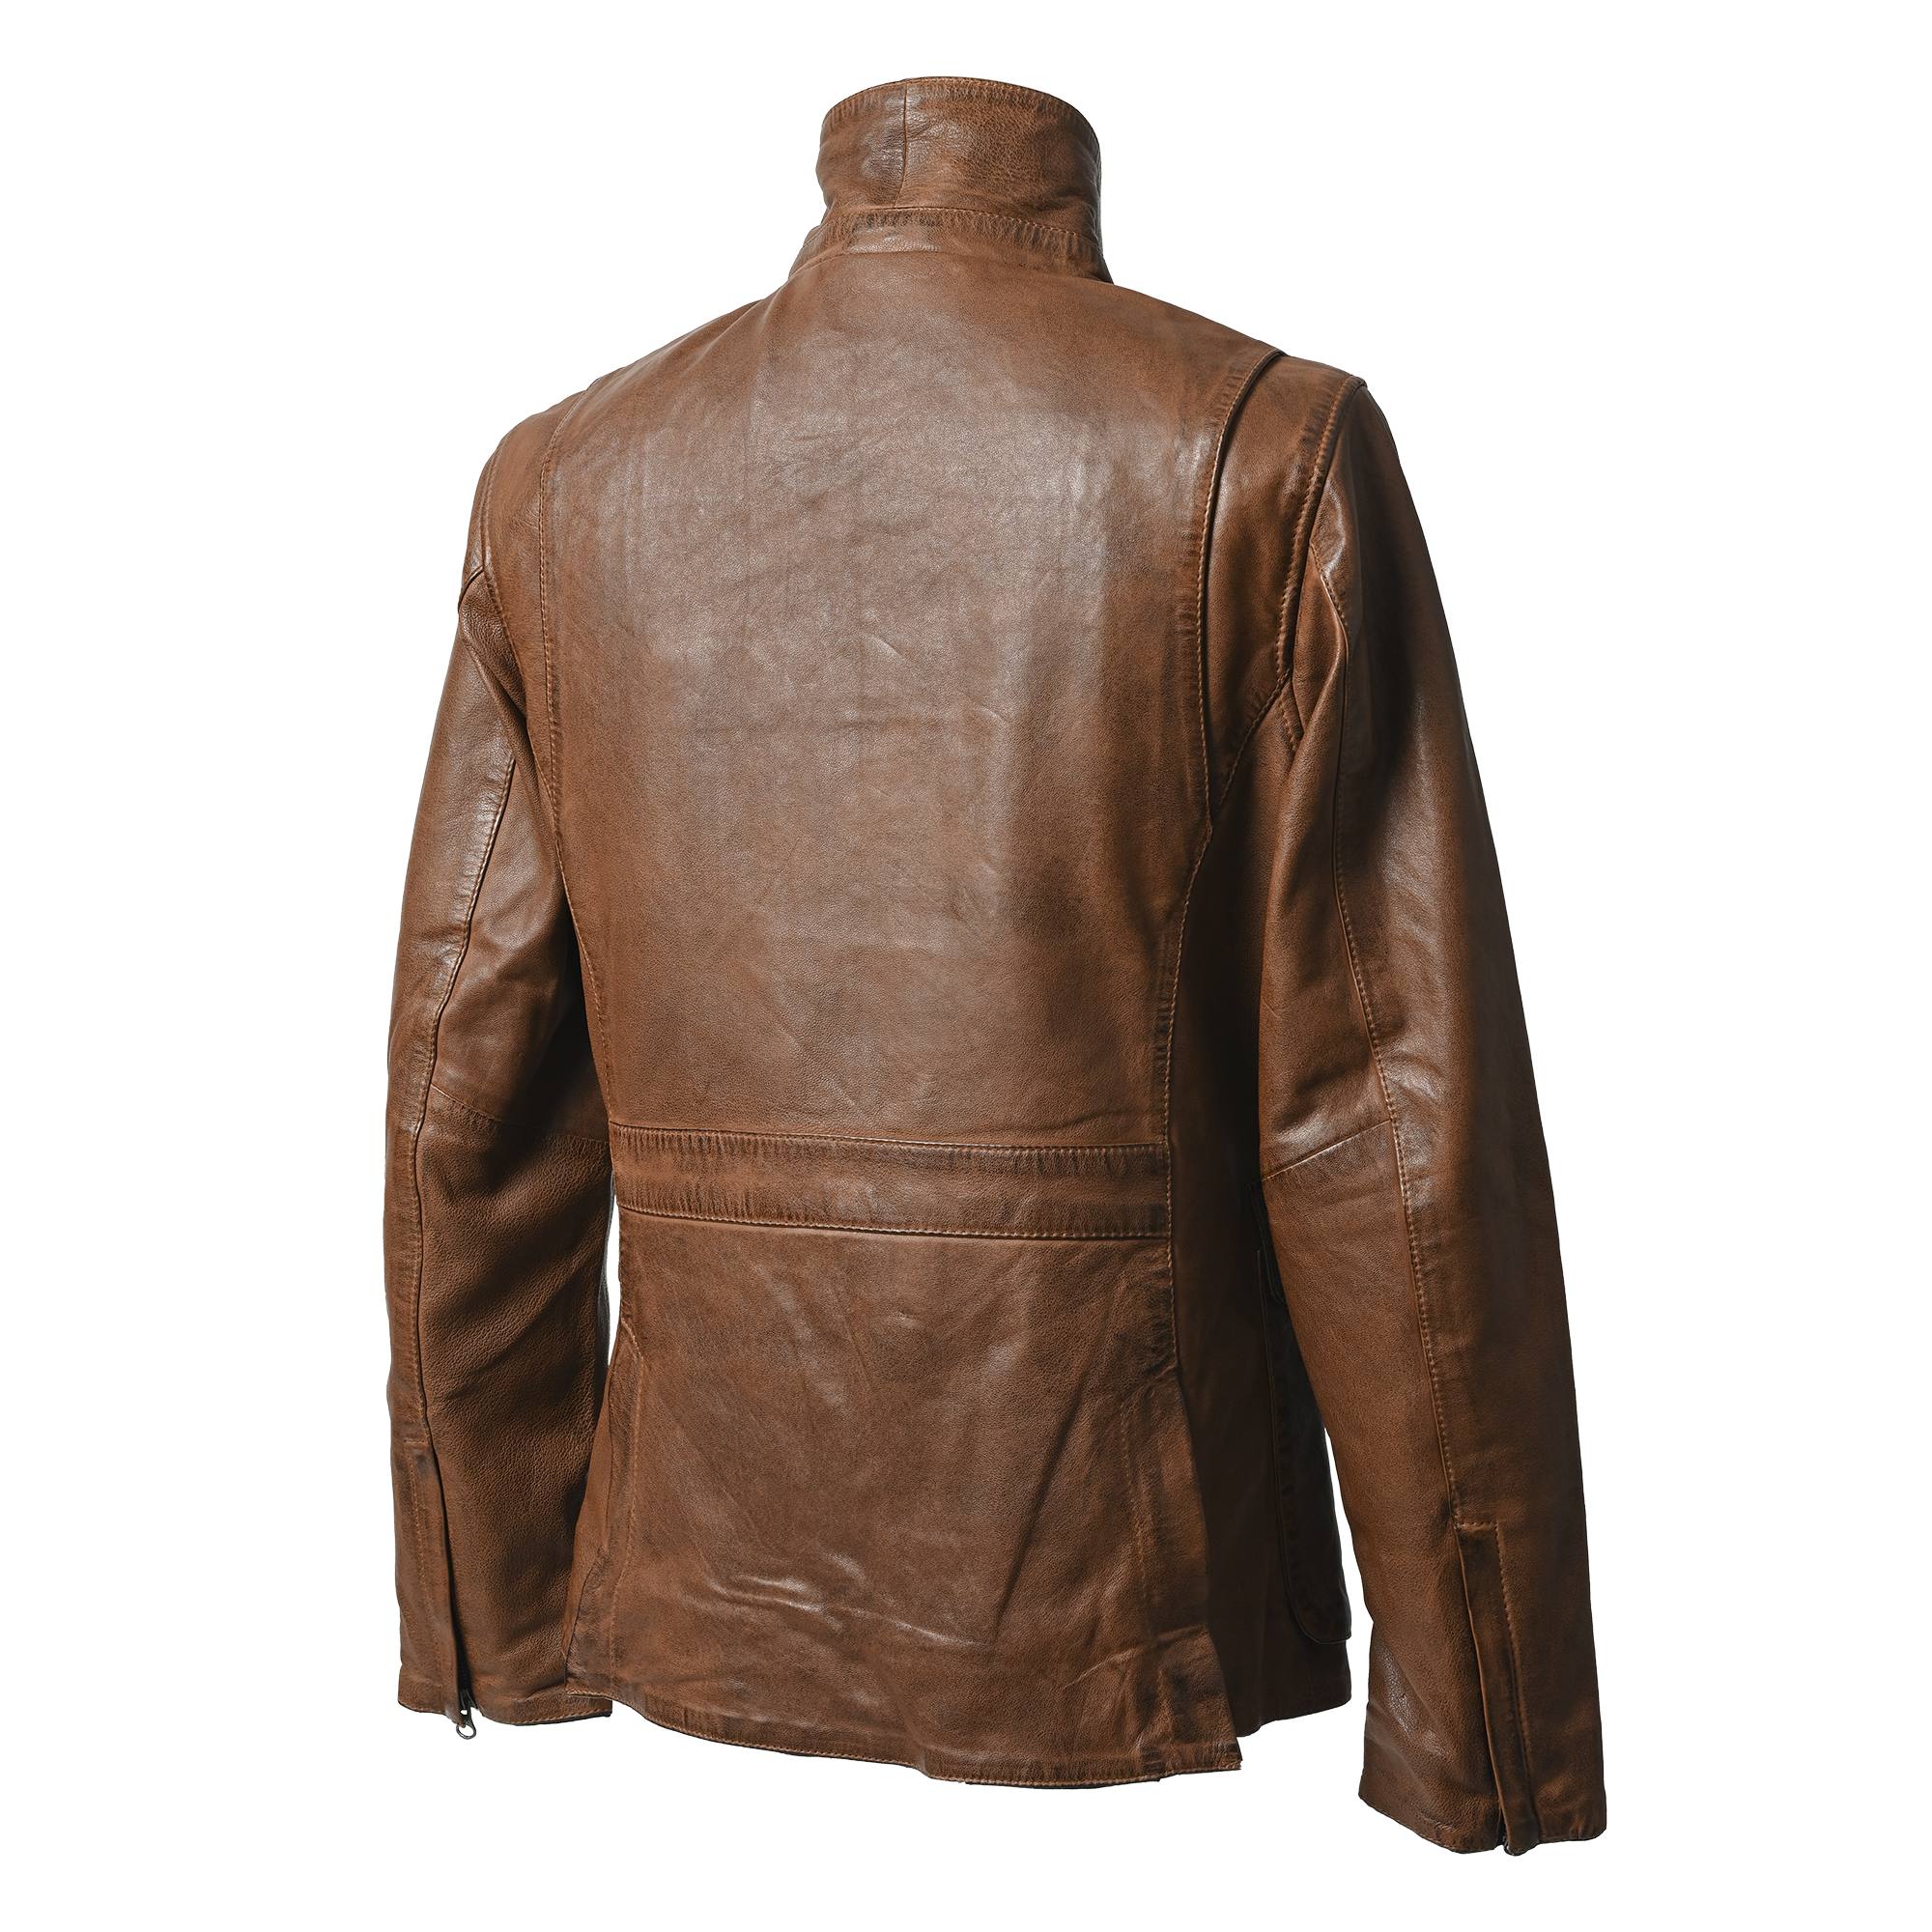 RIDEZ GENTS JACKET Motorcycle Leather Jacket Brown RLJ900 